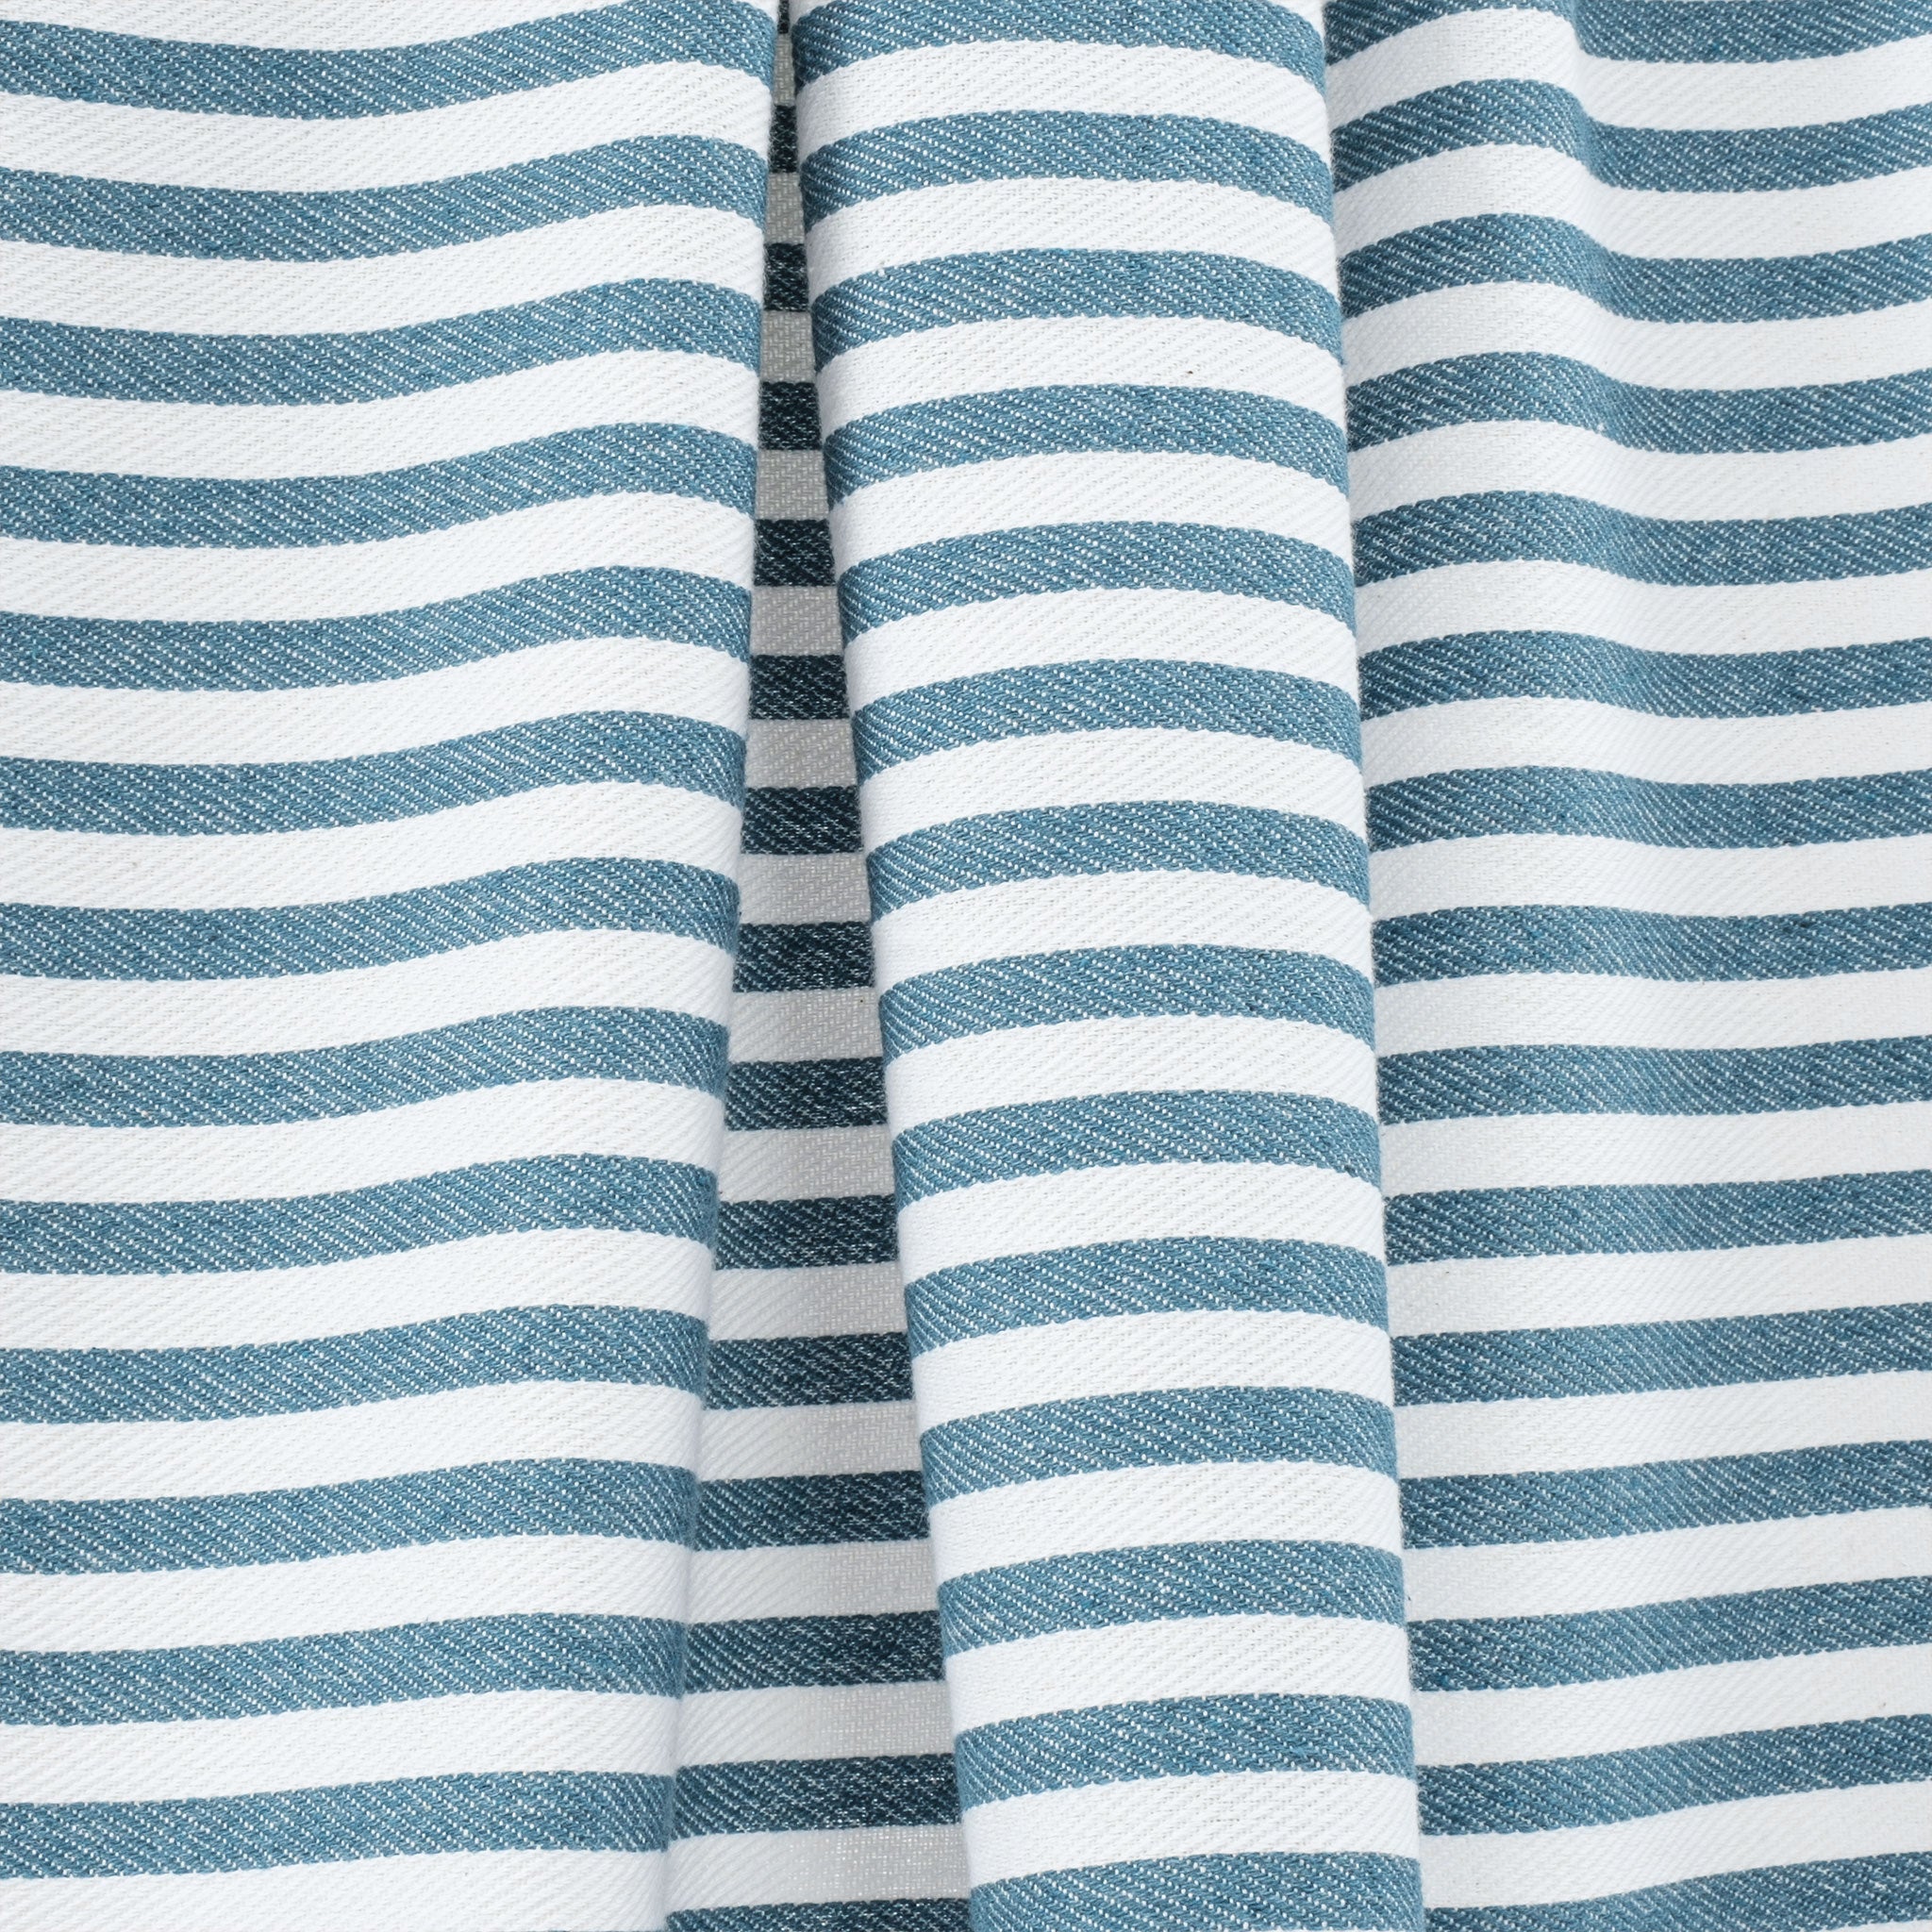 American Soft Linen - 100% Cotton Turkish Peshtemal Towels 40x70 Inches - Petrol-Blue - 2